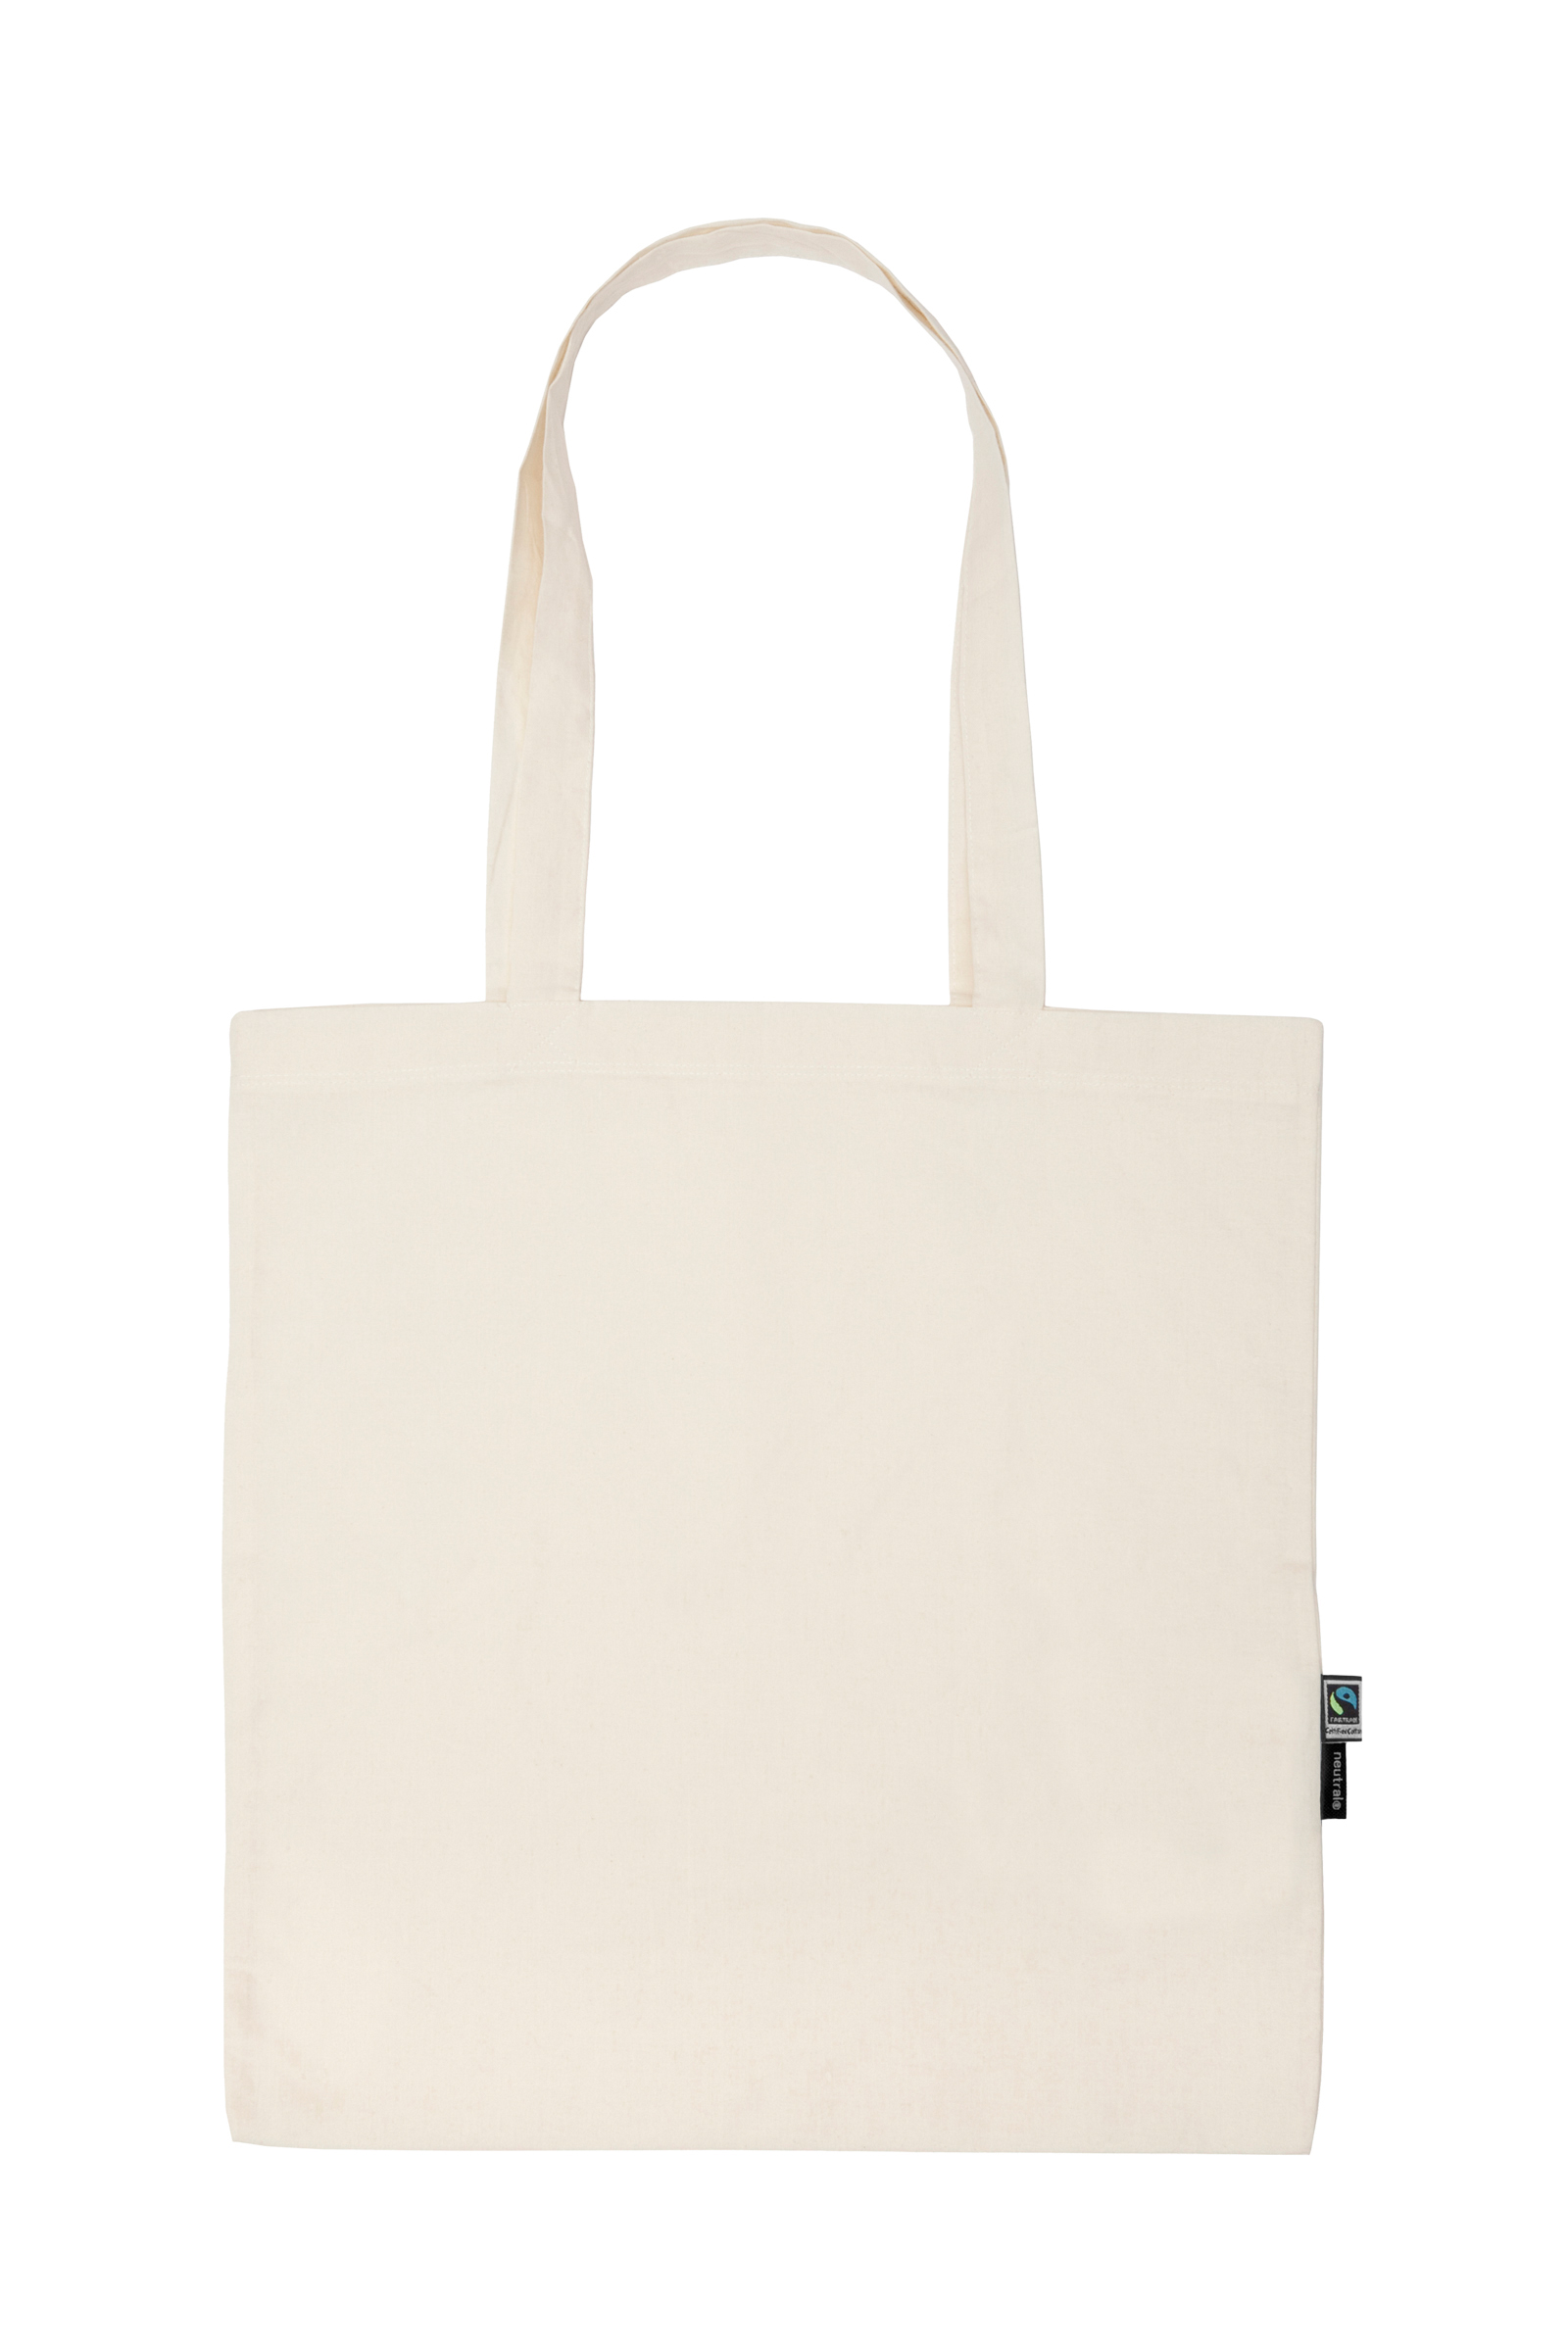 Organic Fairtrade Shopping Bag Long Handles 38 x 42 cm Neutral® Nature